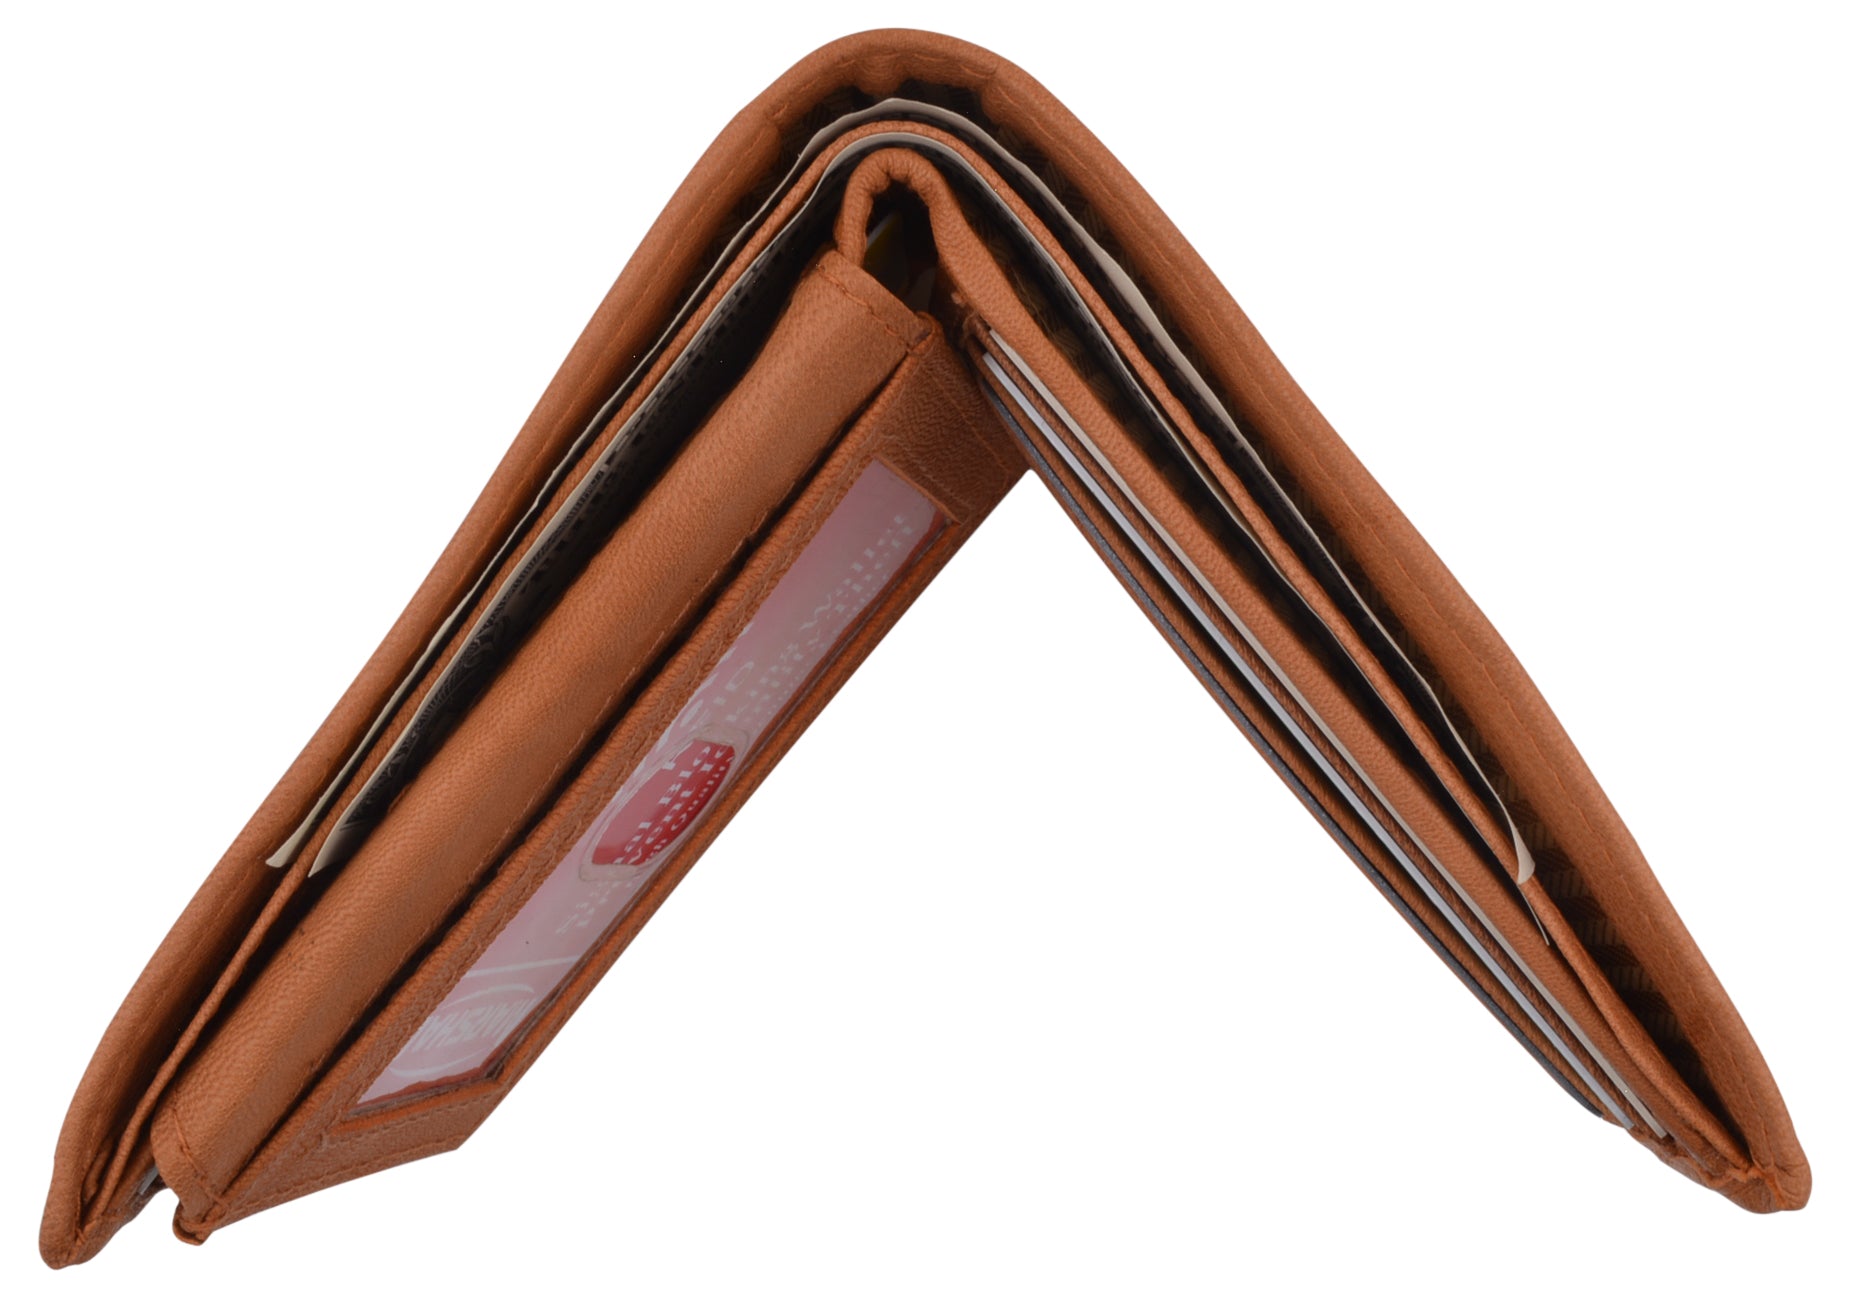 Chain Wallets for Men RFID Blocking Vintage Leather Bifold Wallet